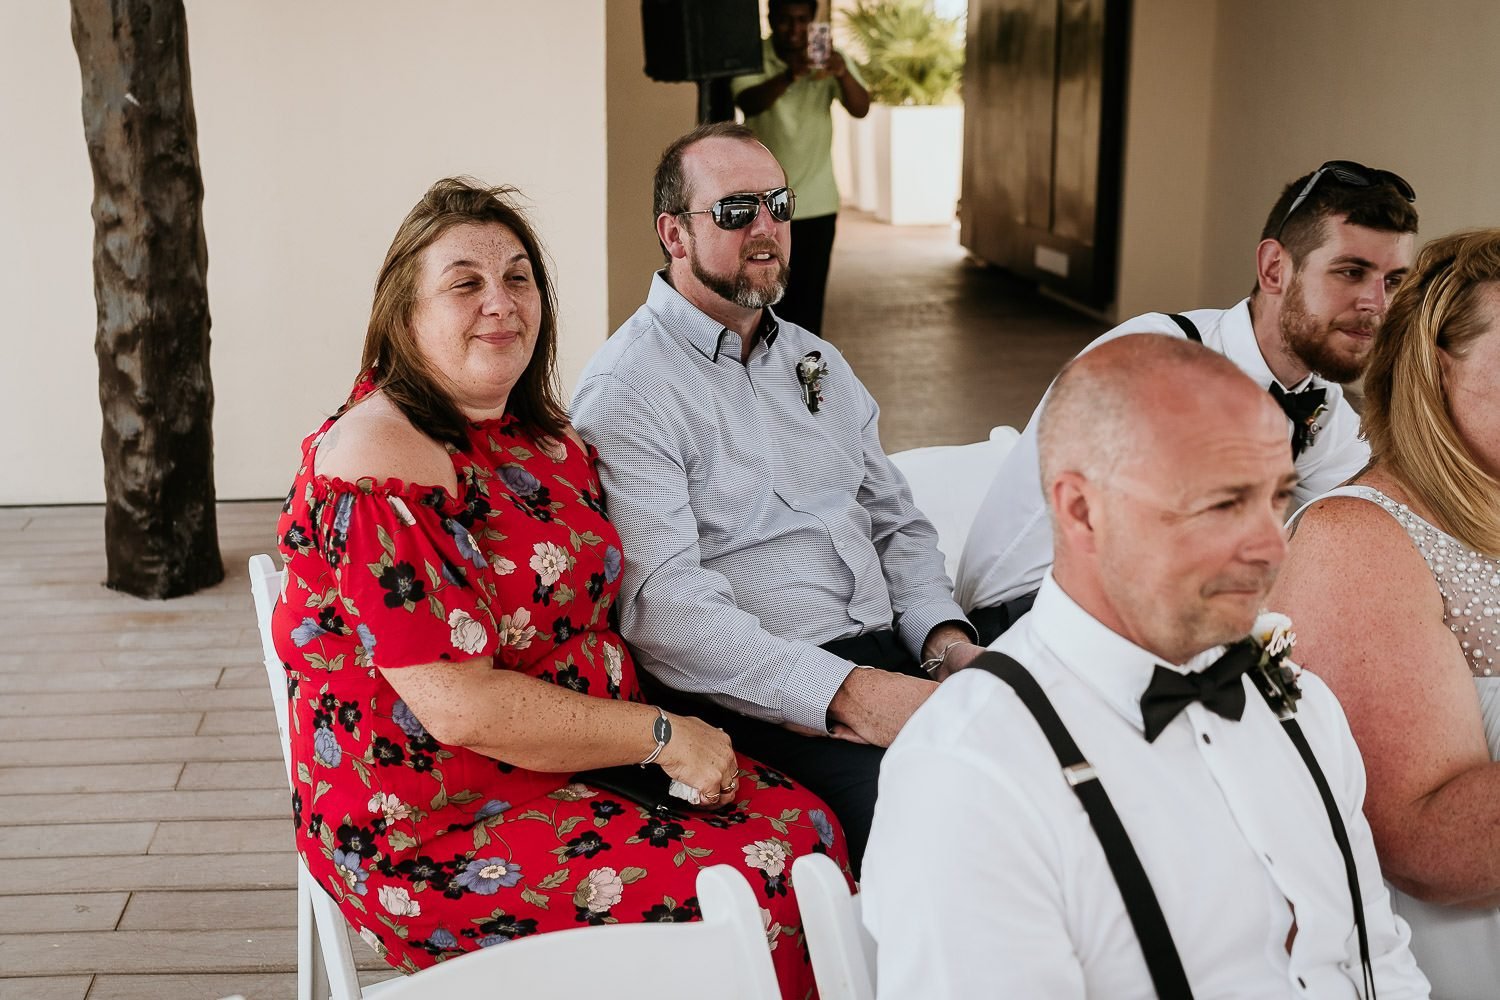 emotional wedding guests watching wedding ceremony